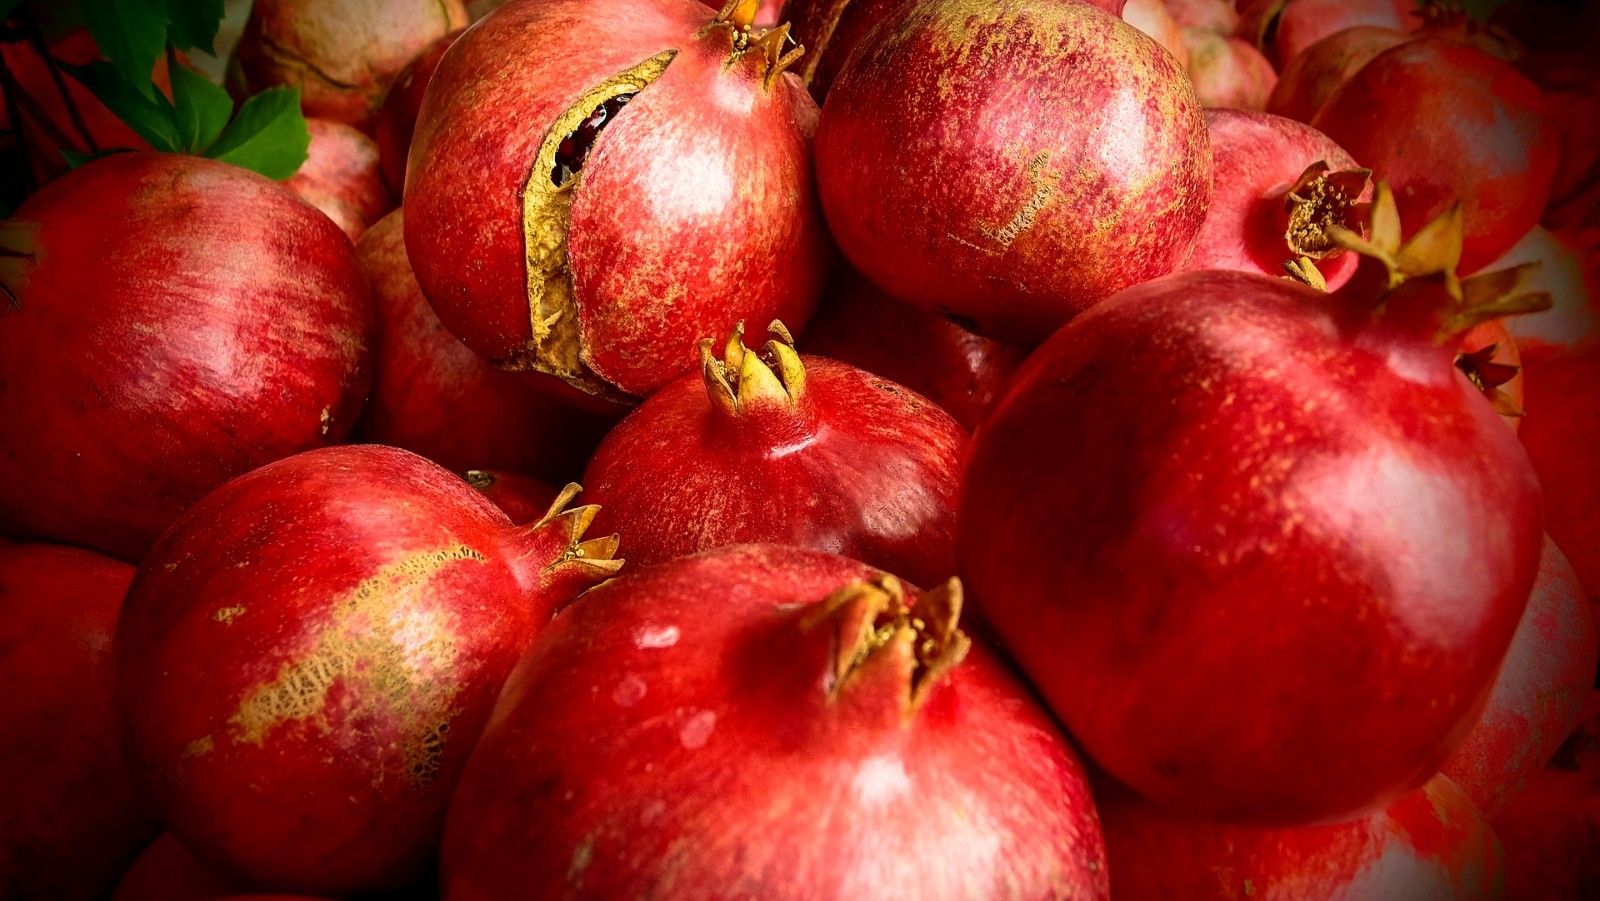 Euromed_pomegranates_Copyright by Thomas Breher Pixabay.jpg